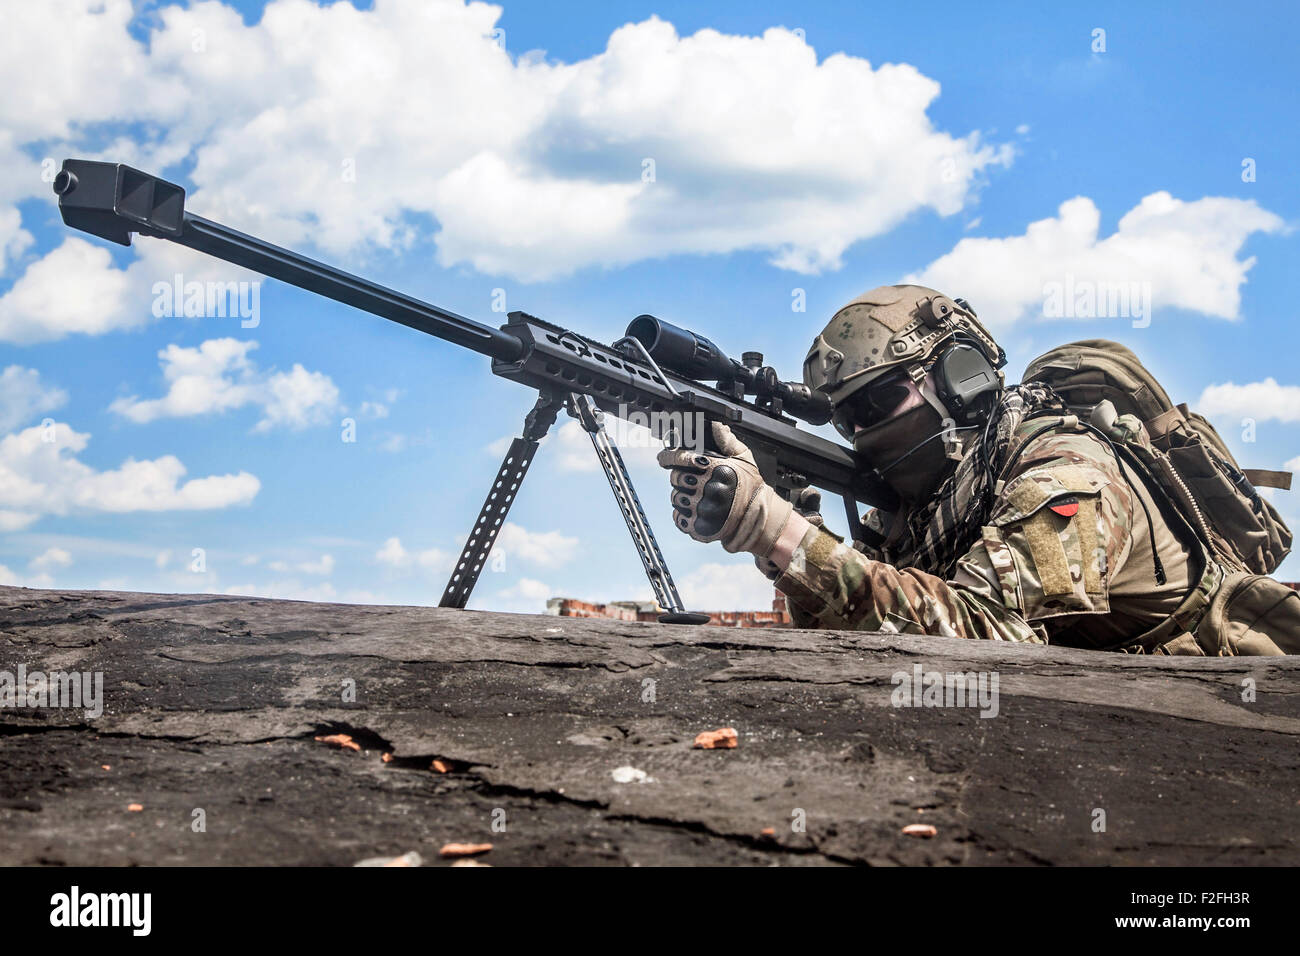 Army ranger sniper Stock Photo